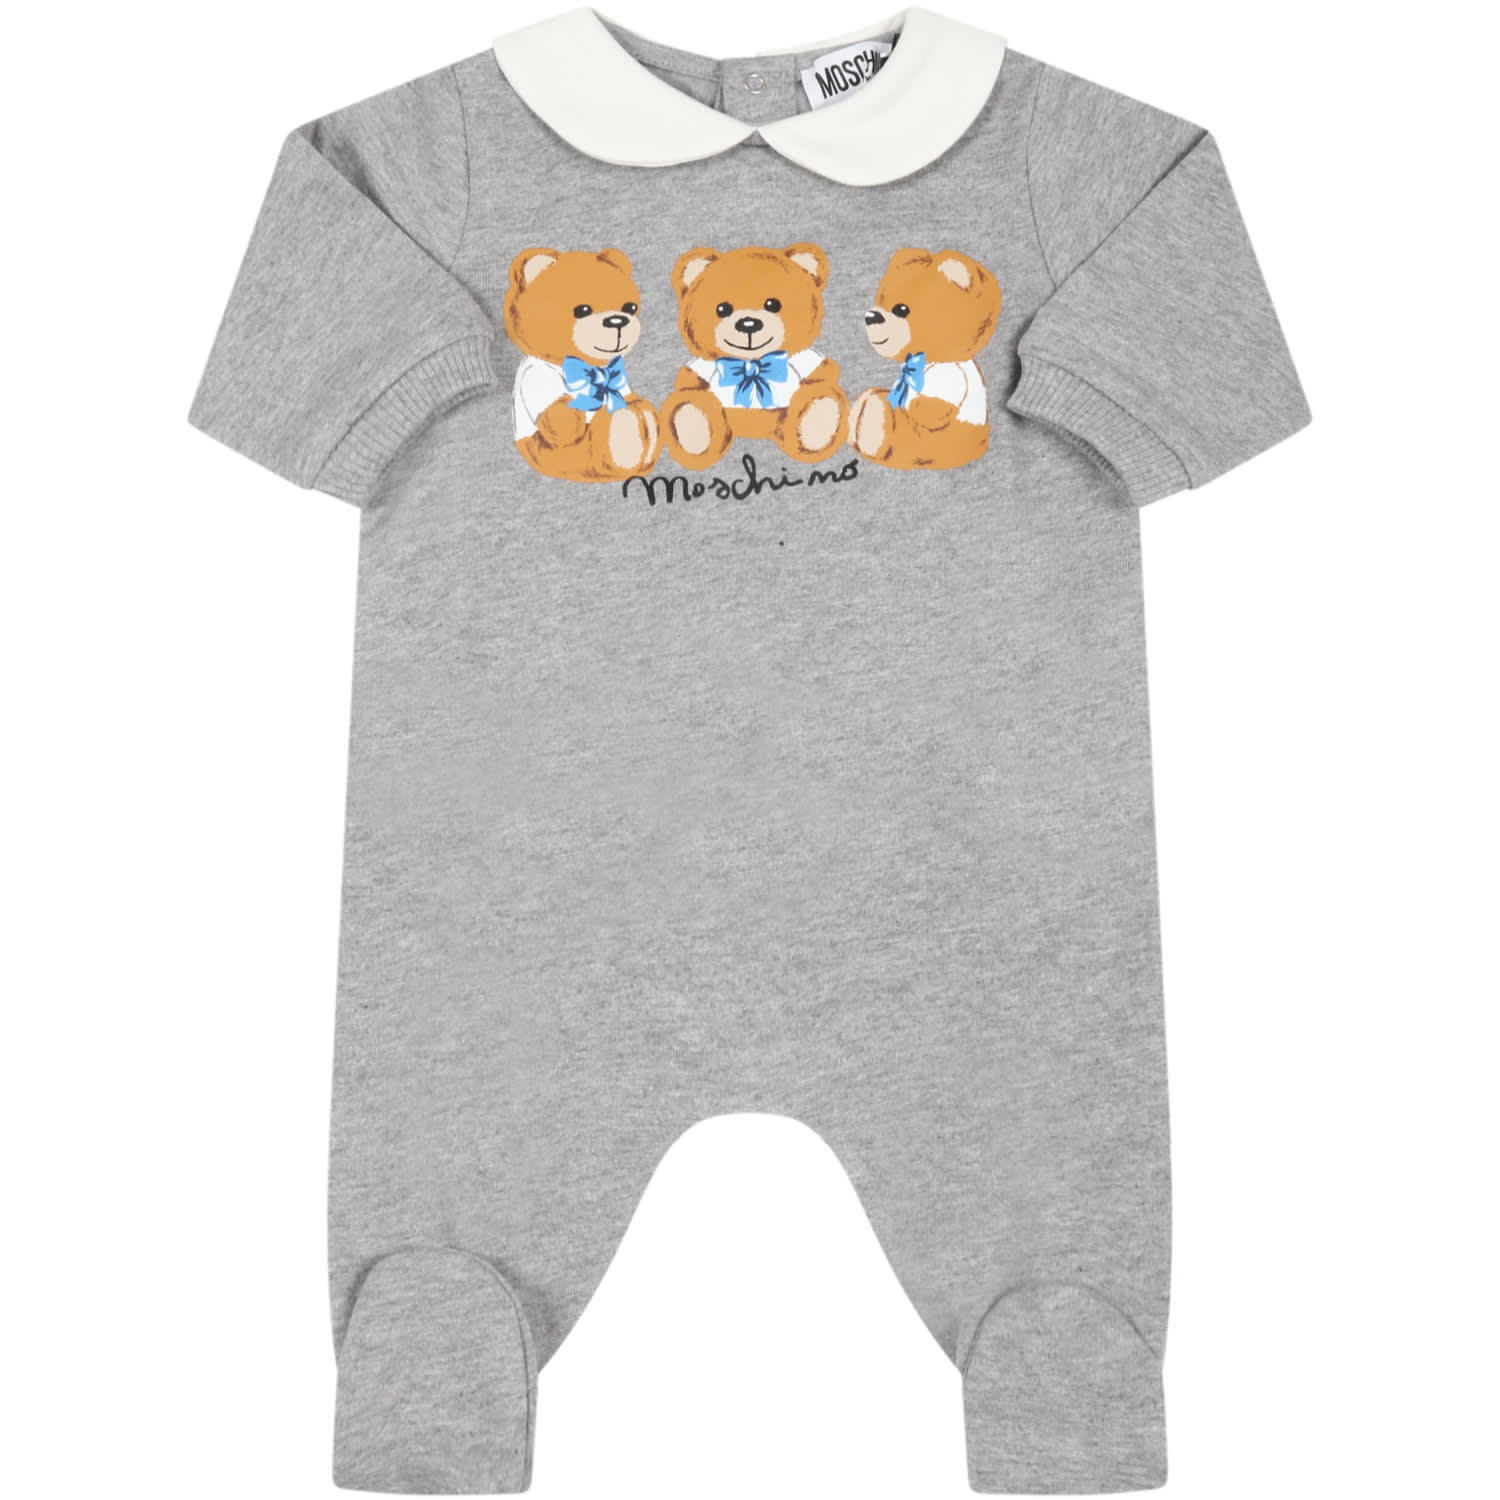 Moschino Grey Babygrow For Baby Kids With Teddy Bears